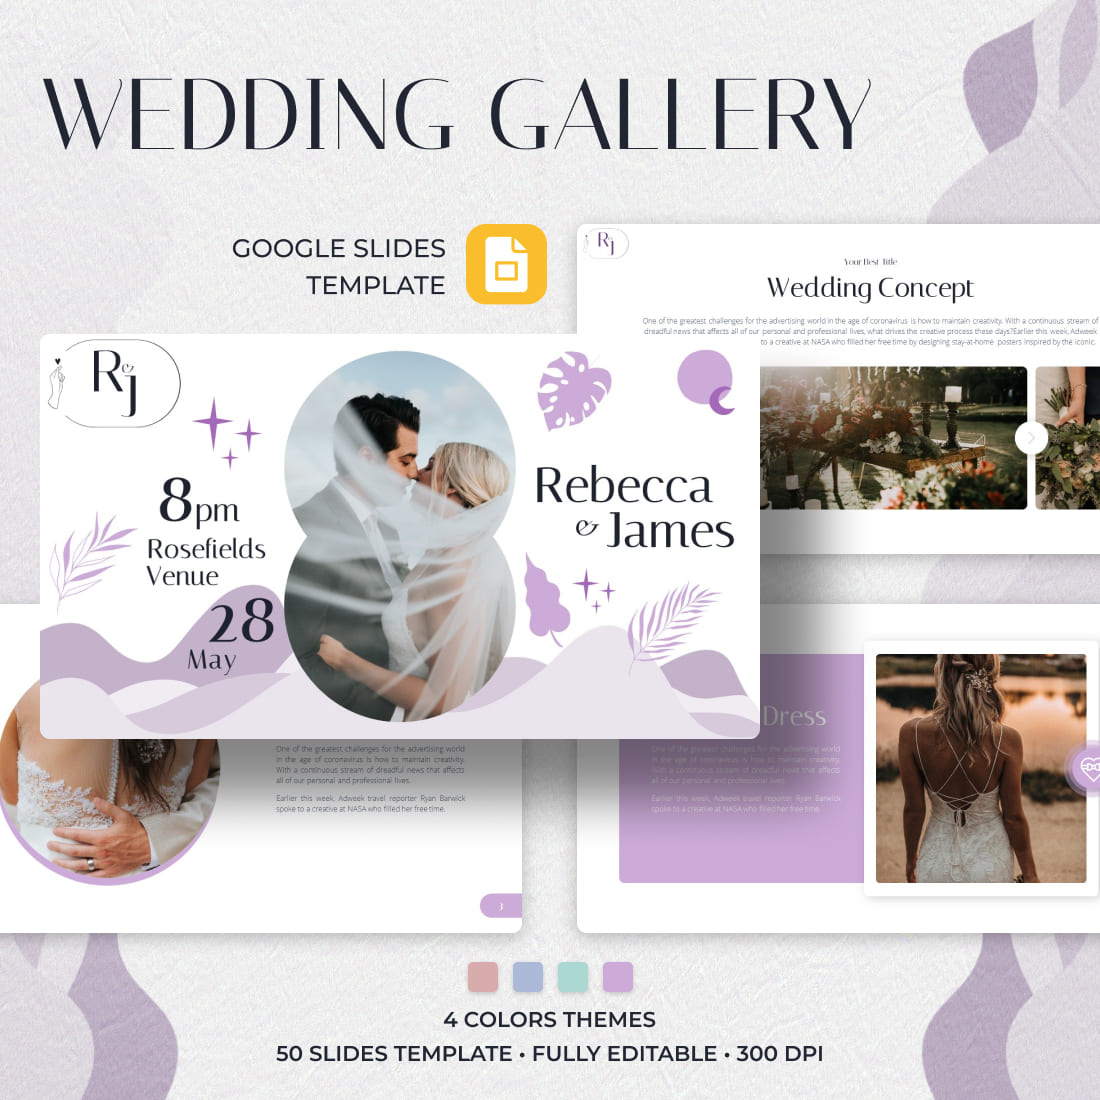 Wedding Gallery Google Slides Theme.